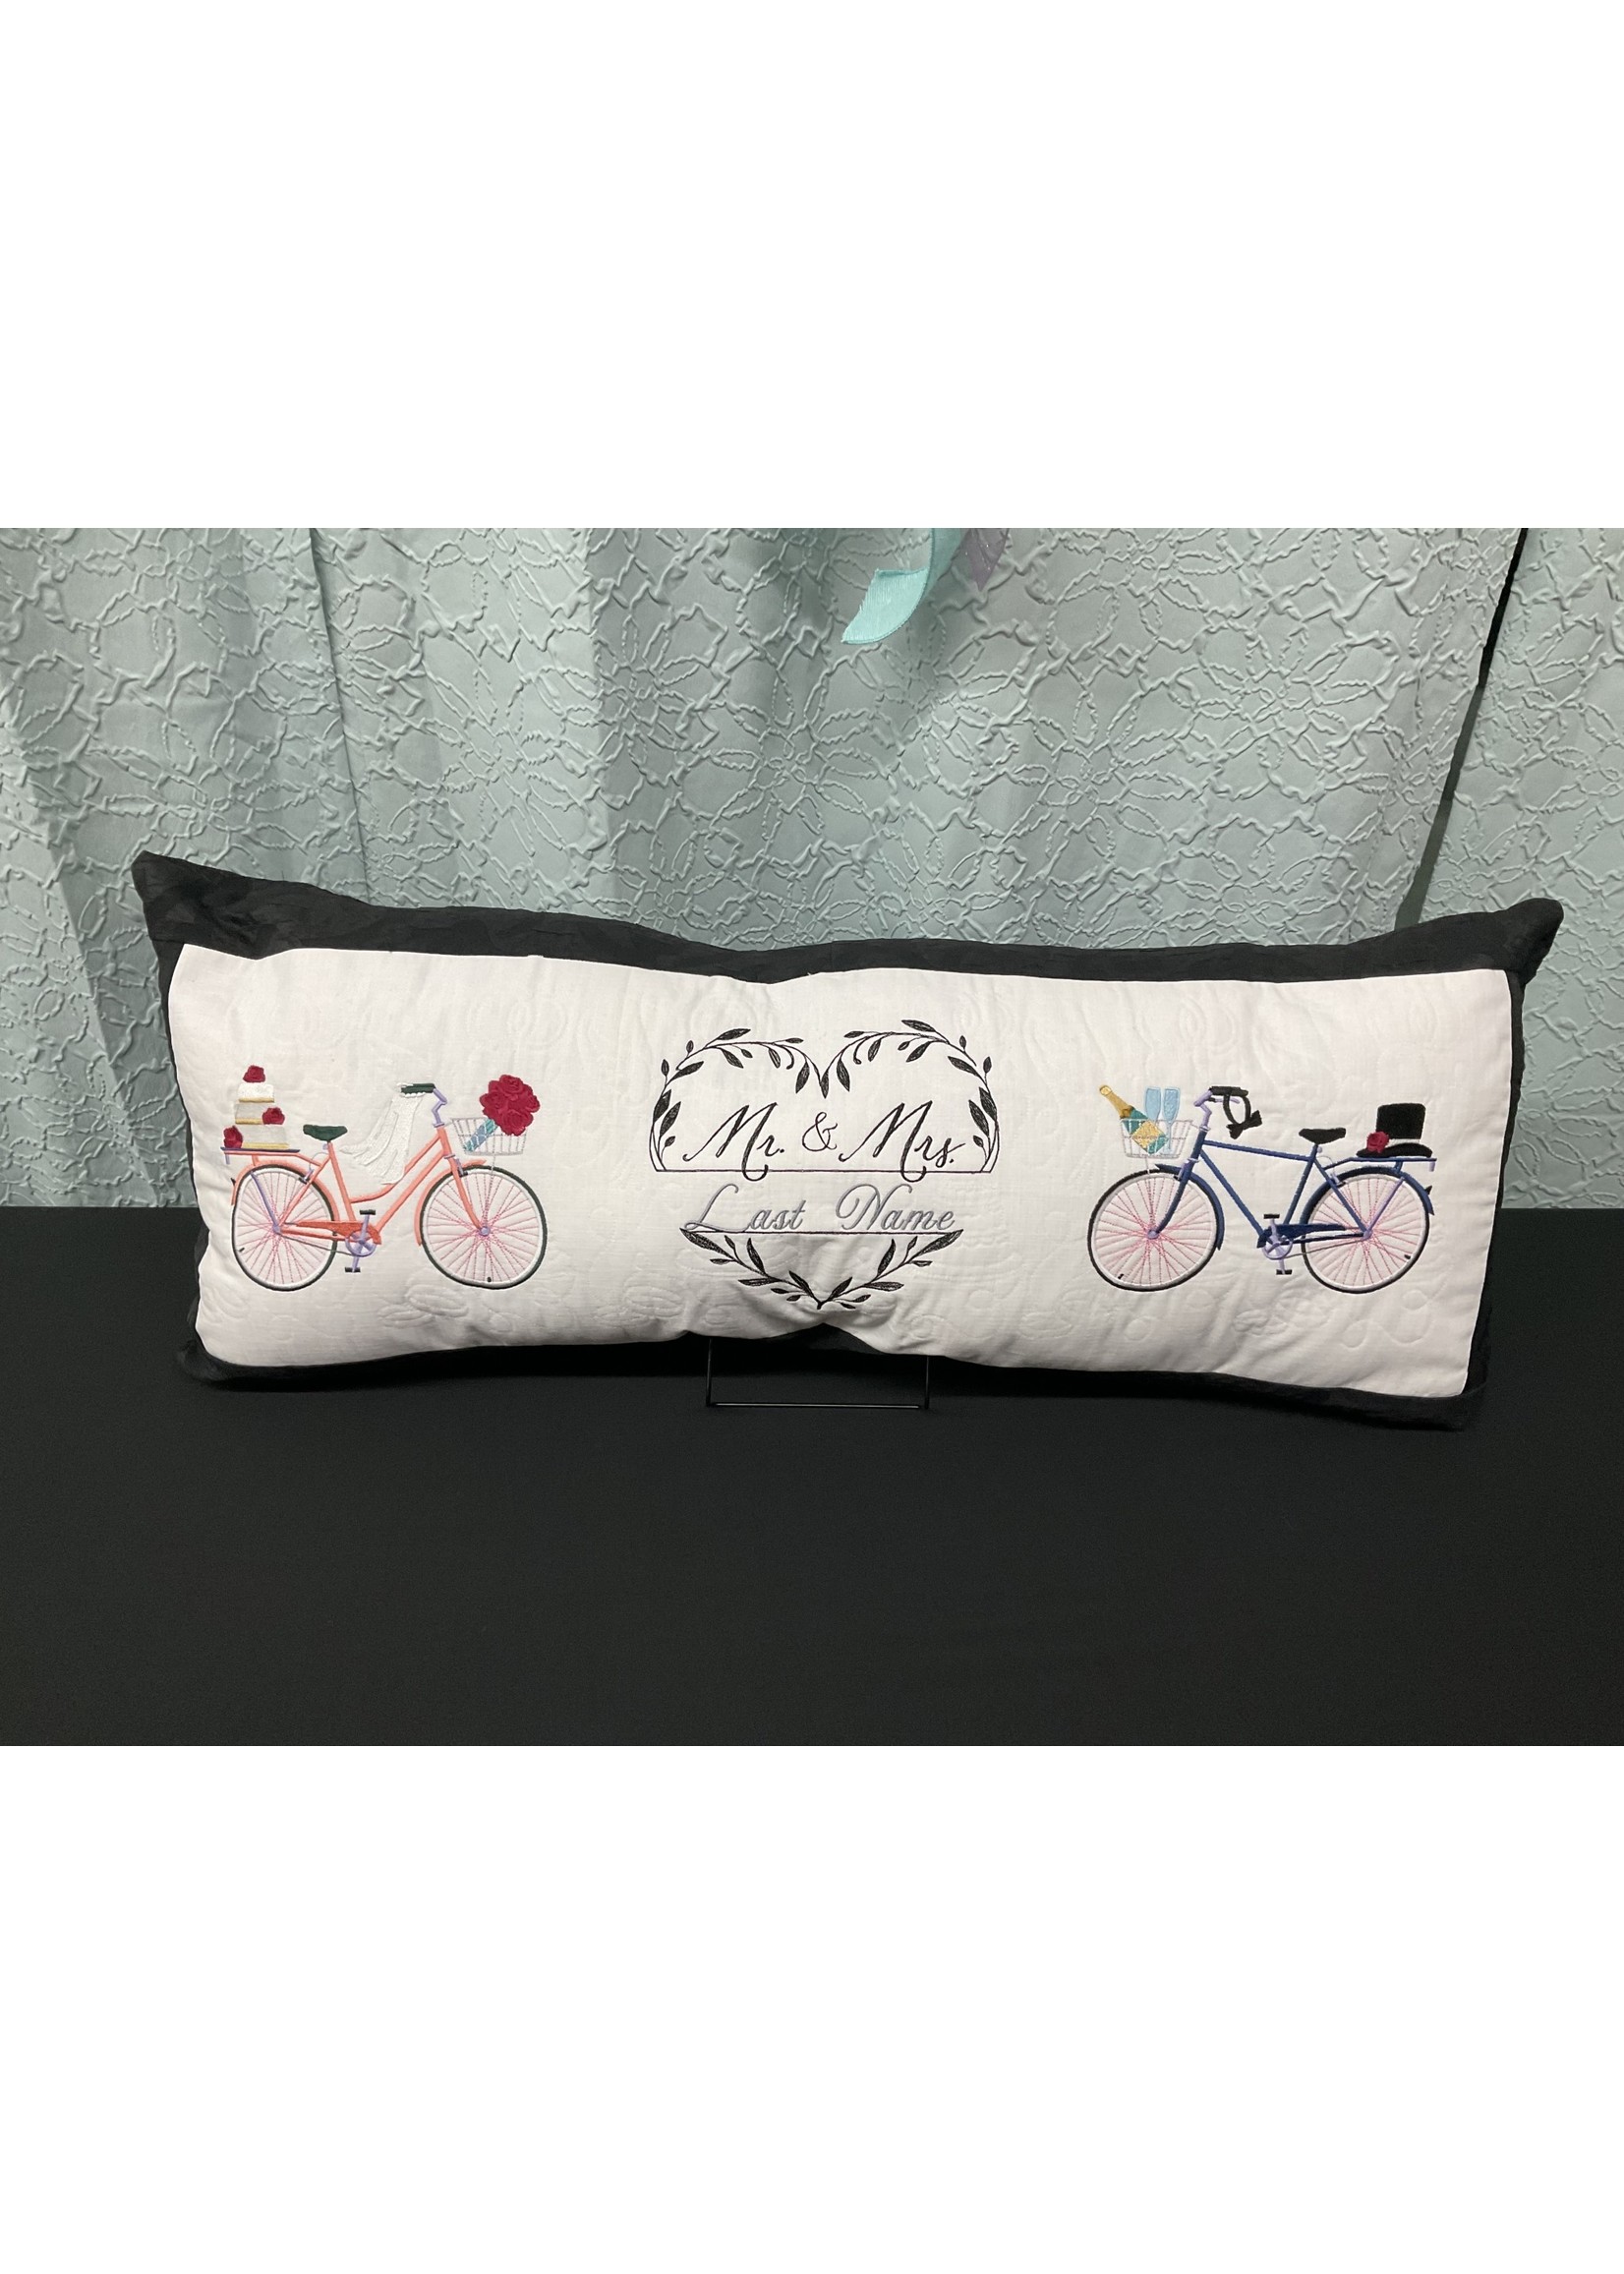 A010-103 Mr & Mrs. Bike Bench Pillow Black and White Sample